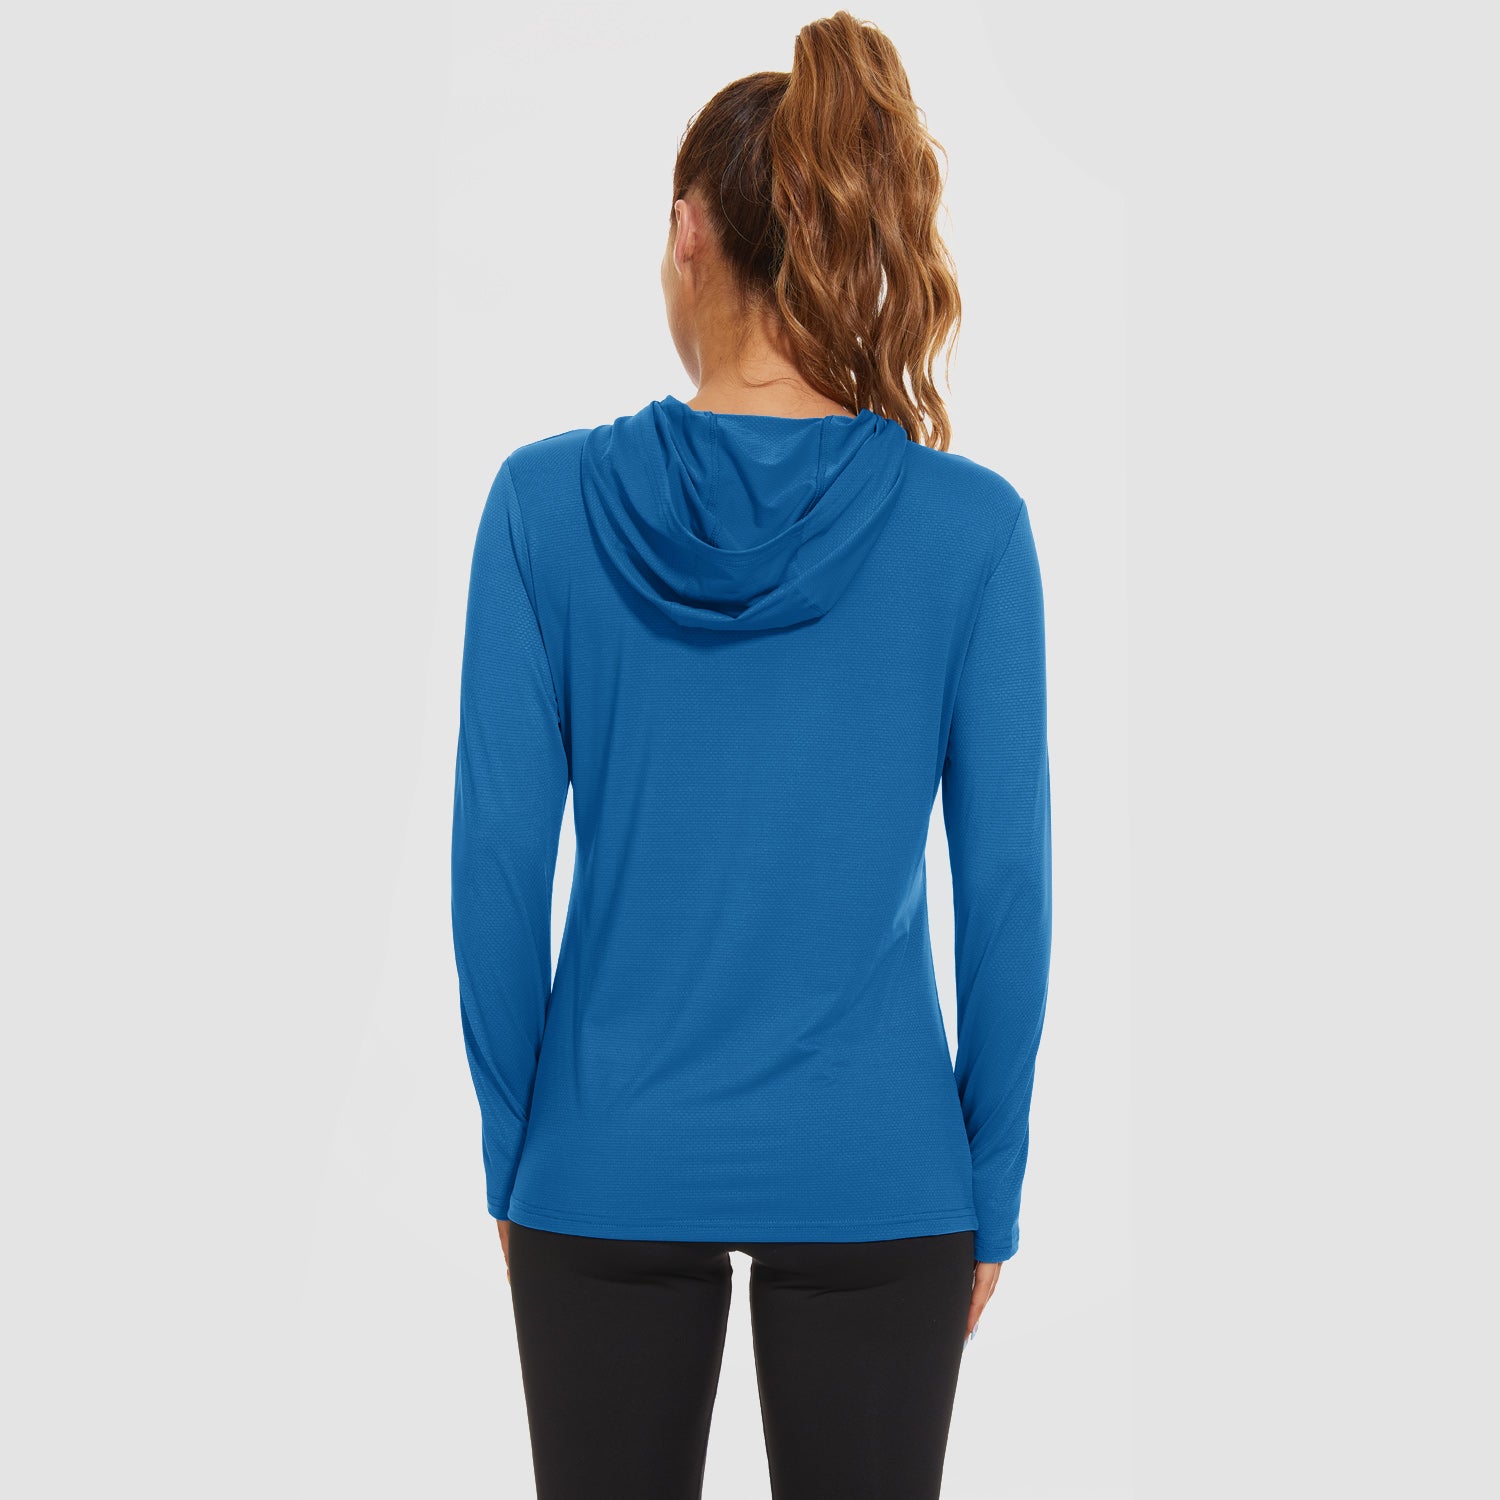 Women's Hoodie Shirts UPF 50+ Sun Protection Long Sleeve UV Shirt Fishing Hiking Athletic Shirts with Thumb Hole, Light Grey / M